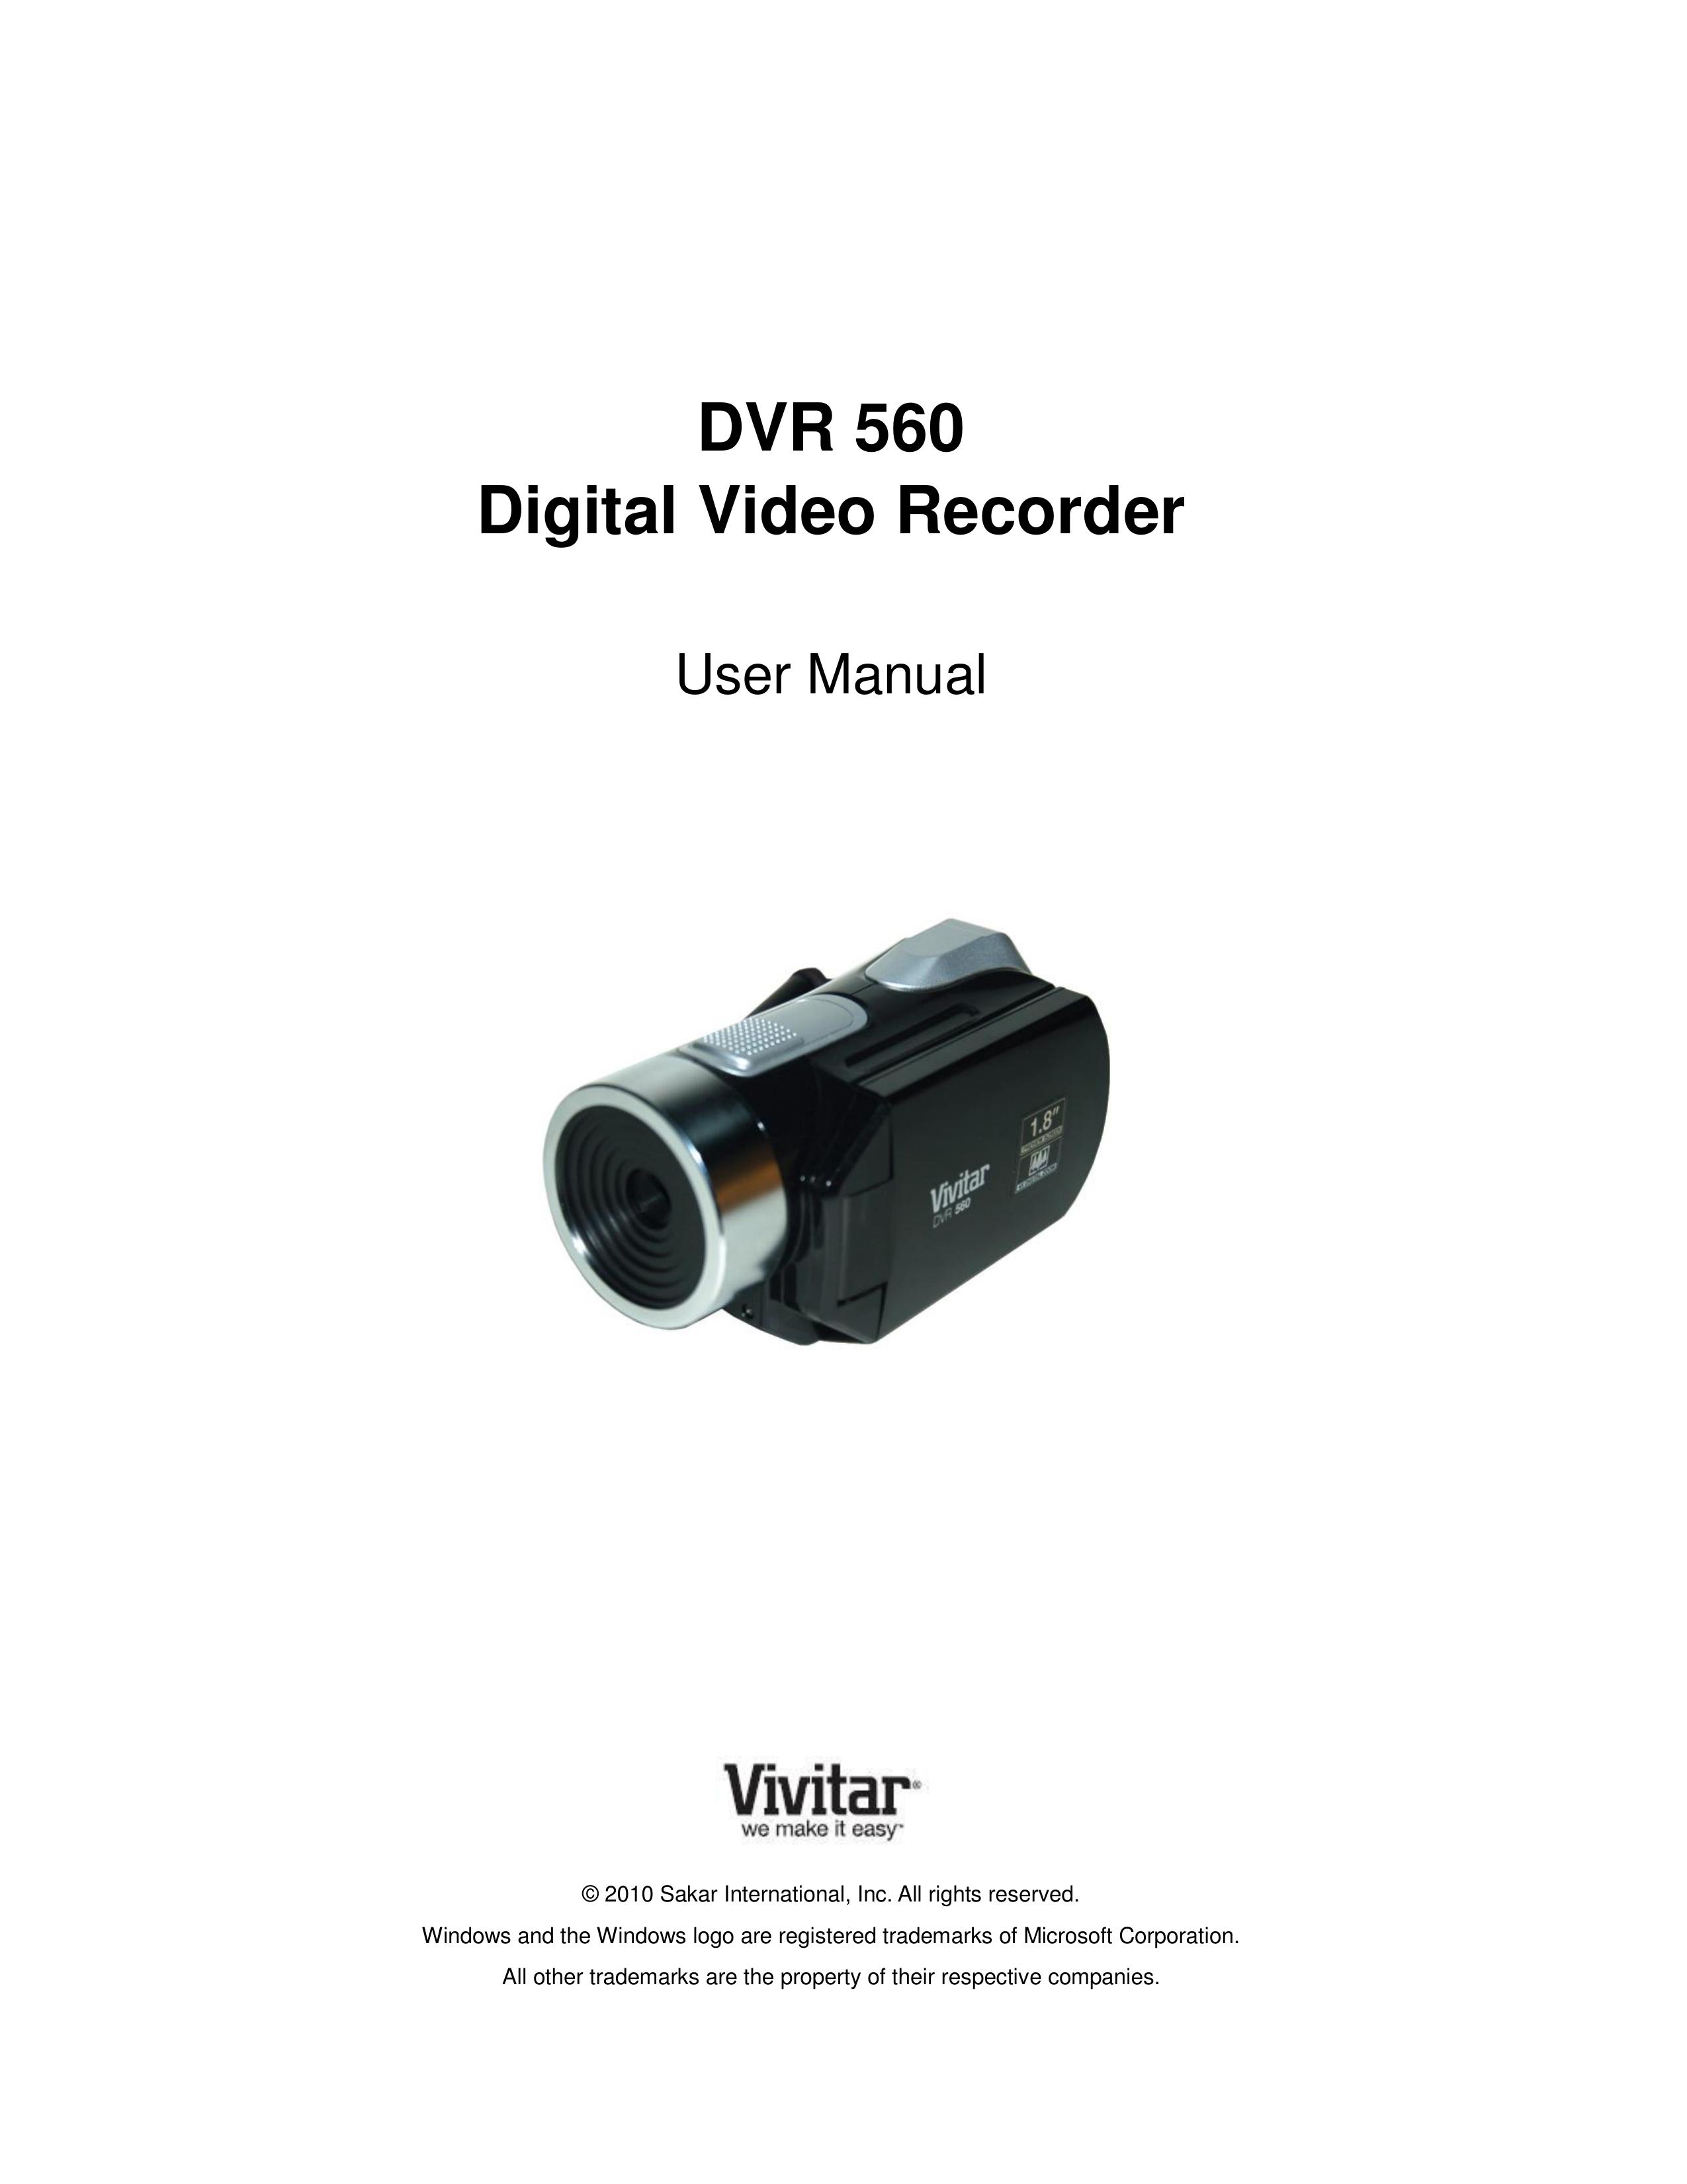 Vivitar DVR560-PNK Camcorder User Manual